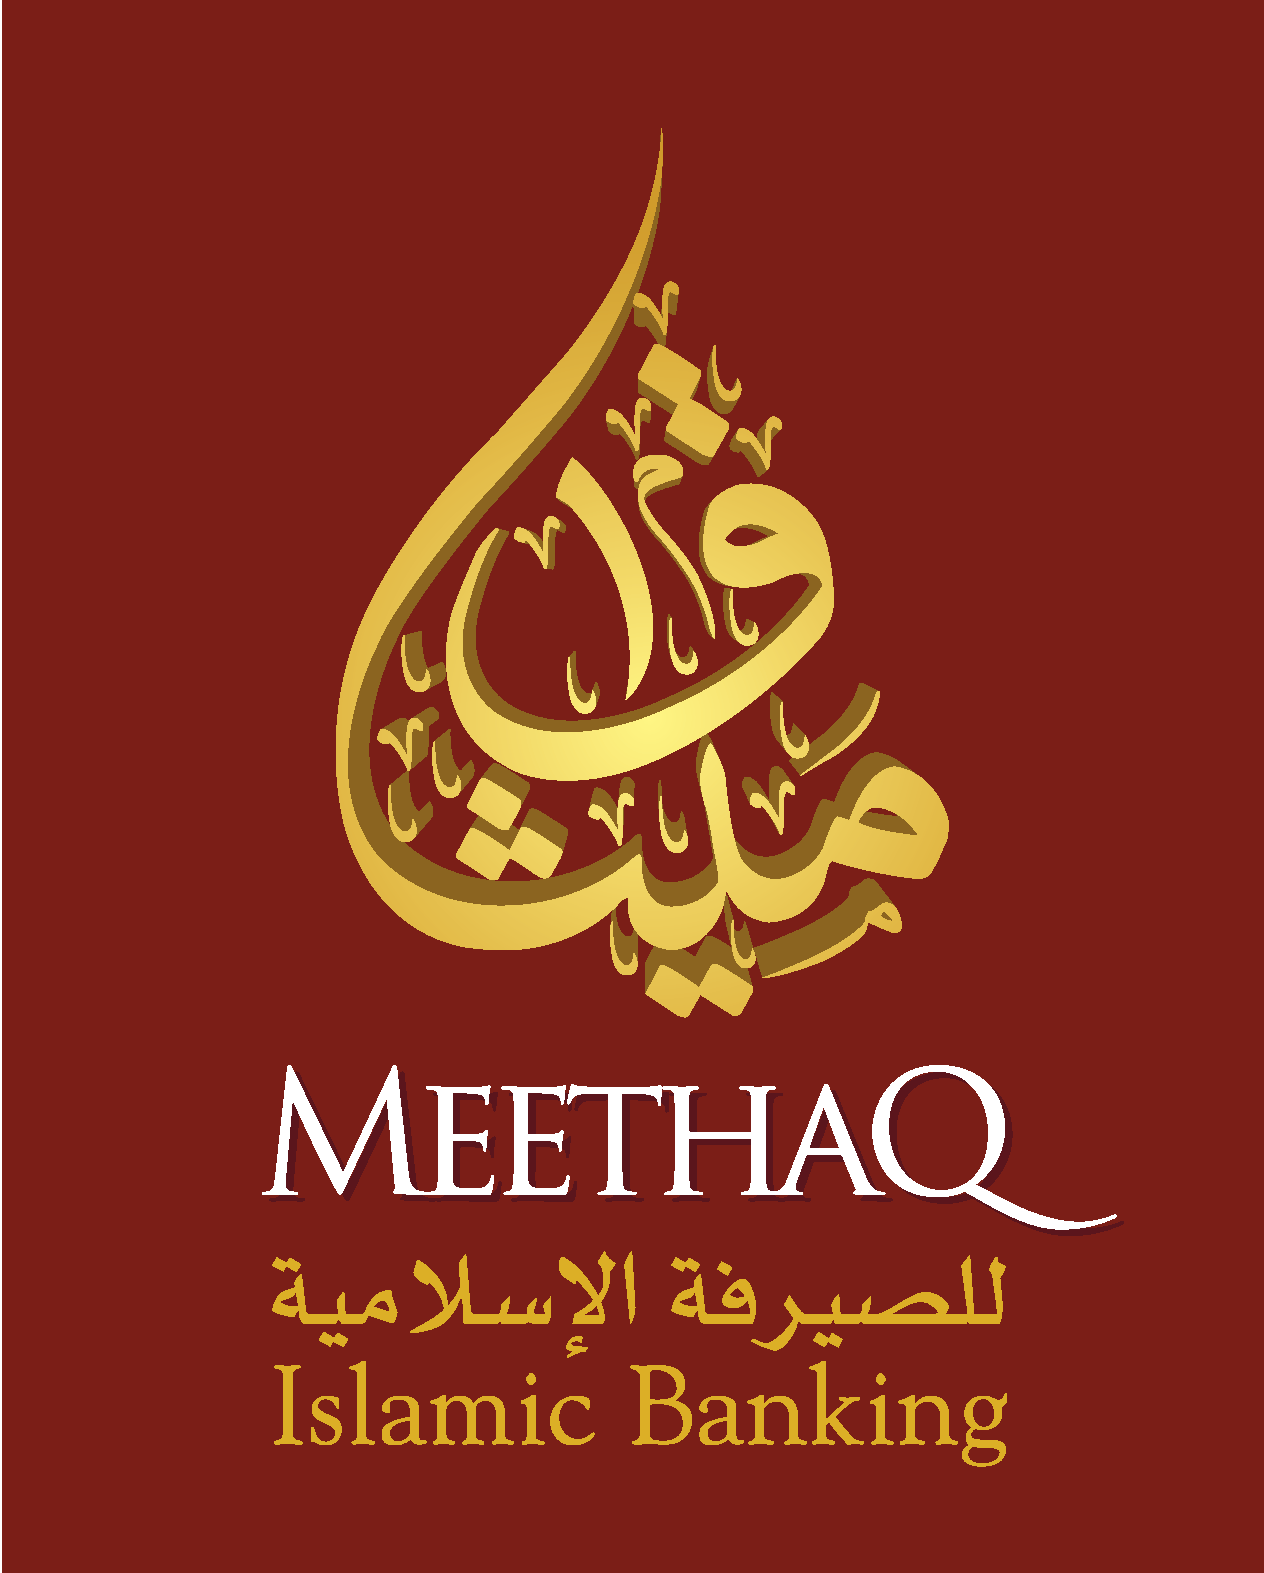 Meethaq logo_vertical Maroon-01.png